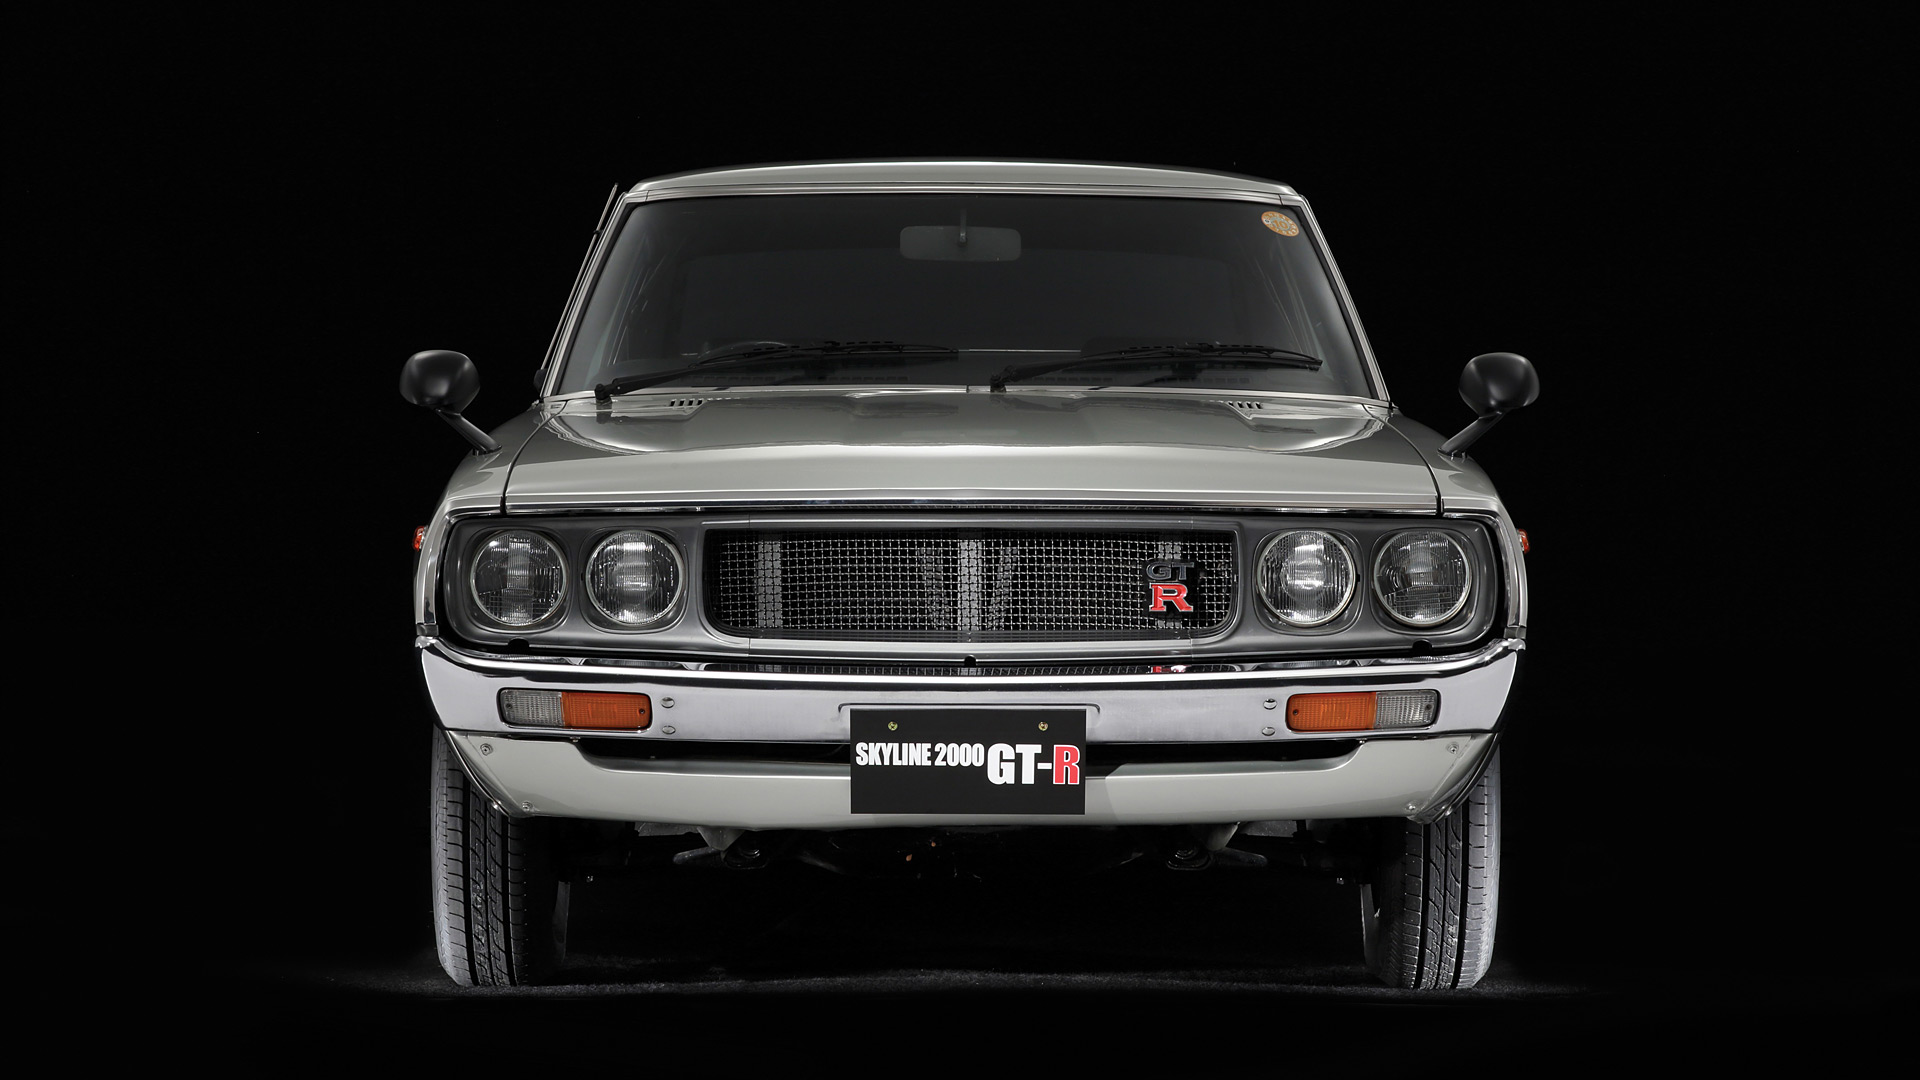  1973 Nissan Skyline 2000GT-R Wallpaper.